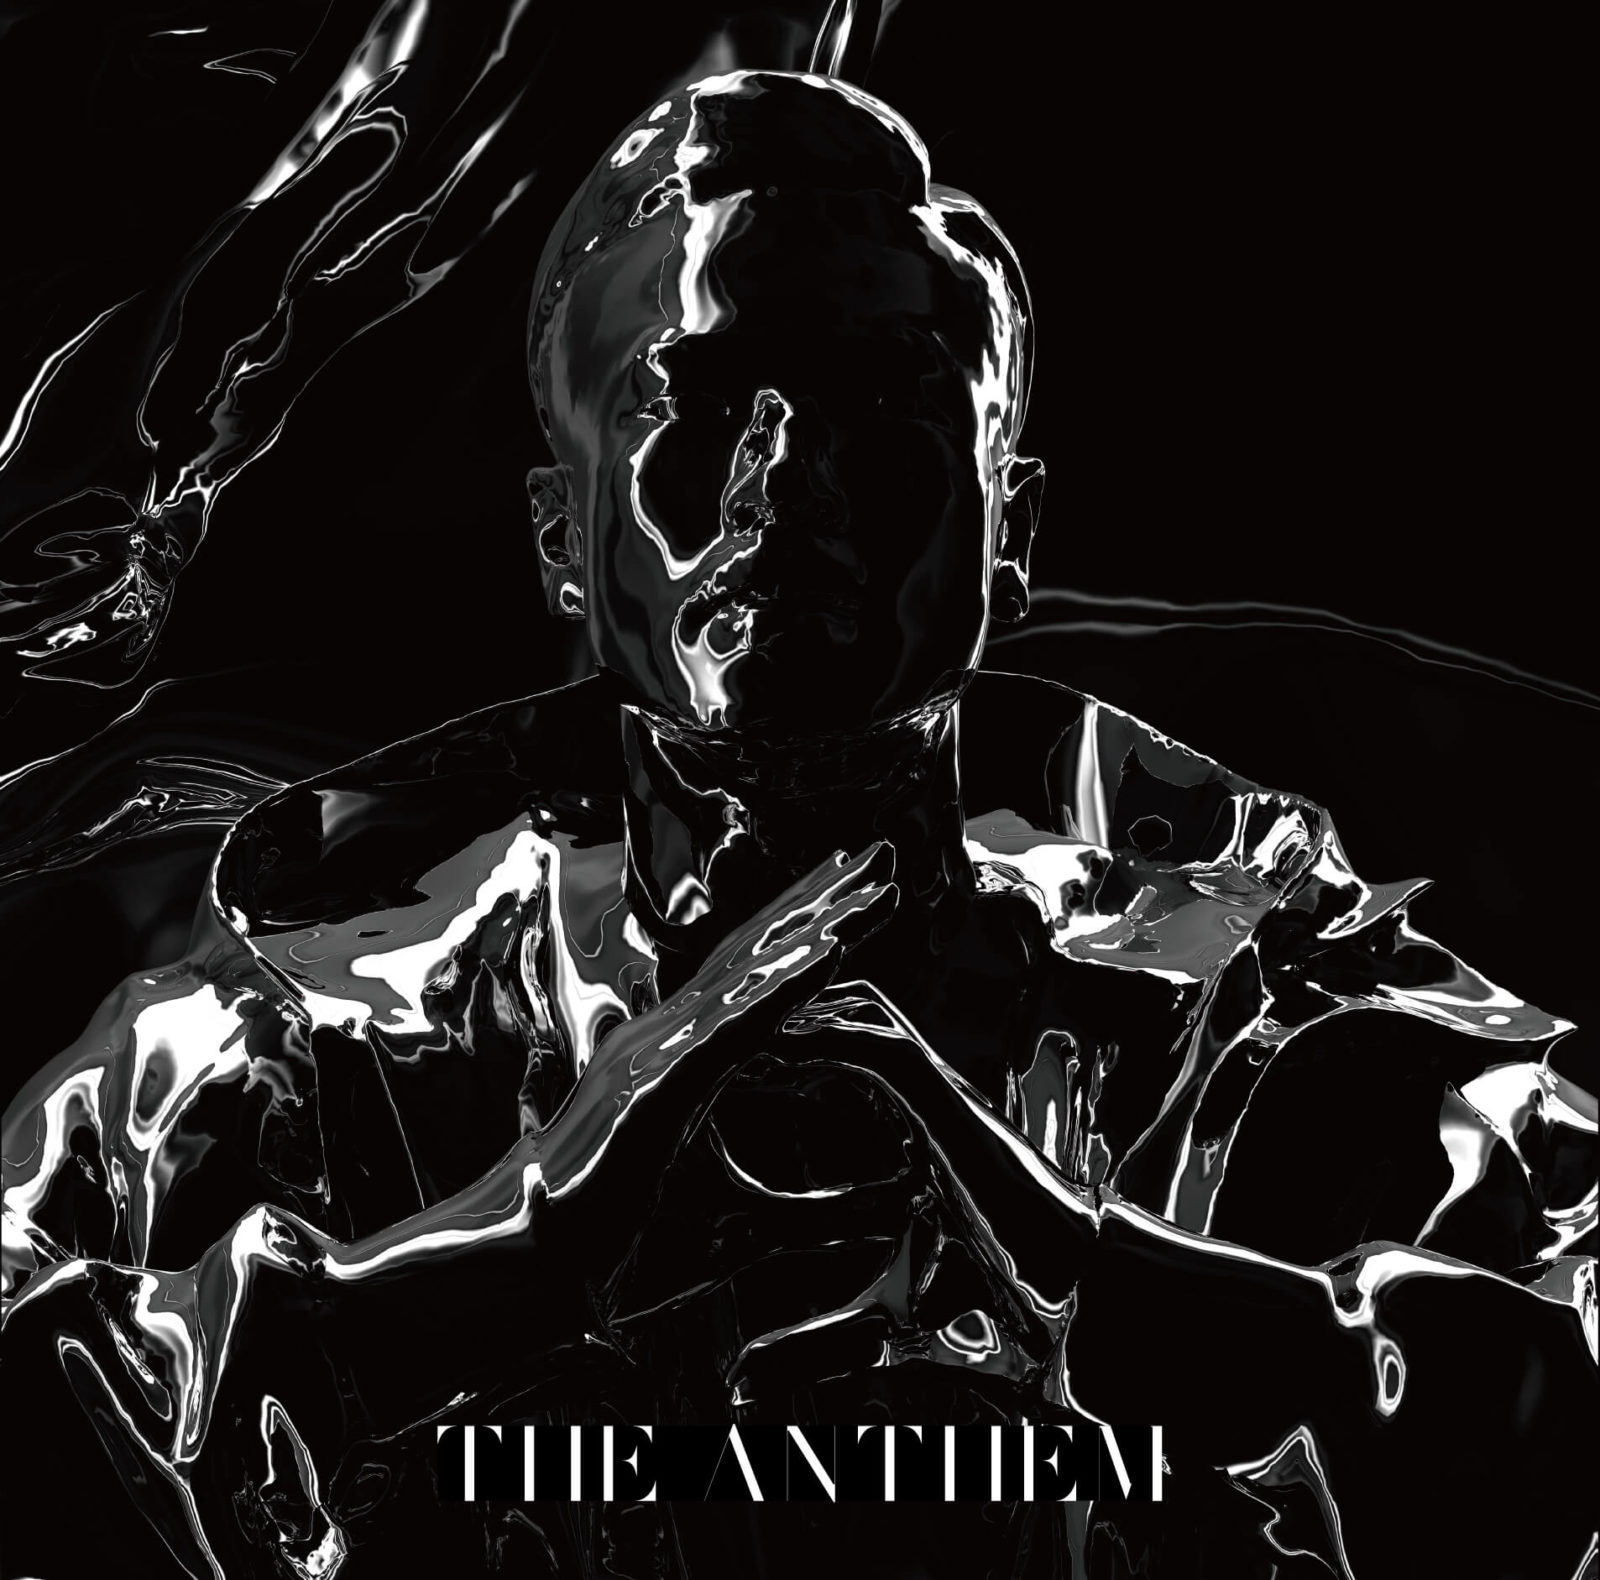 AK-69、Def Jam Recordings 2ndアルバム『THE ANTHEM』の全収録曲タイトル、ジャケット・アートワークが公開